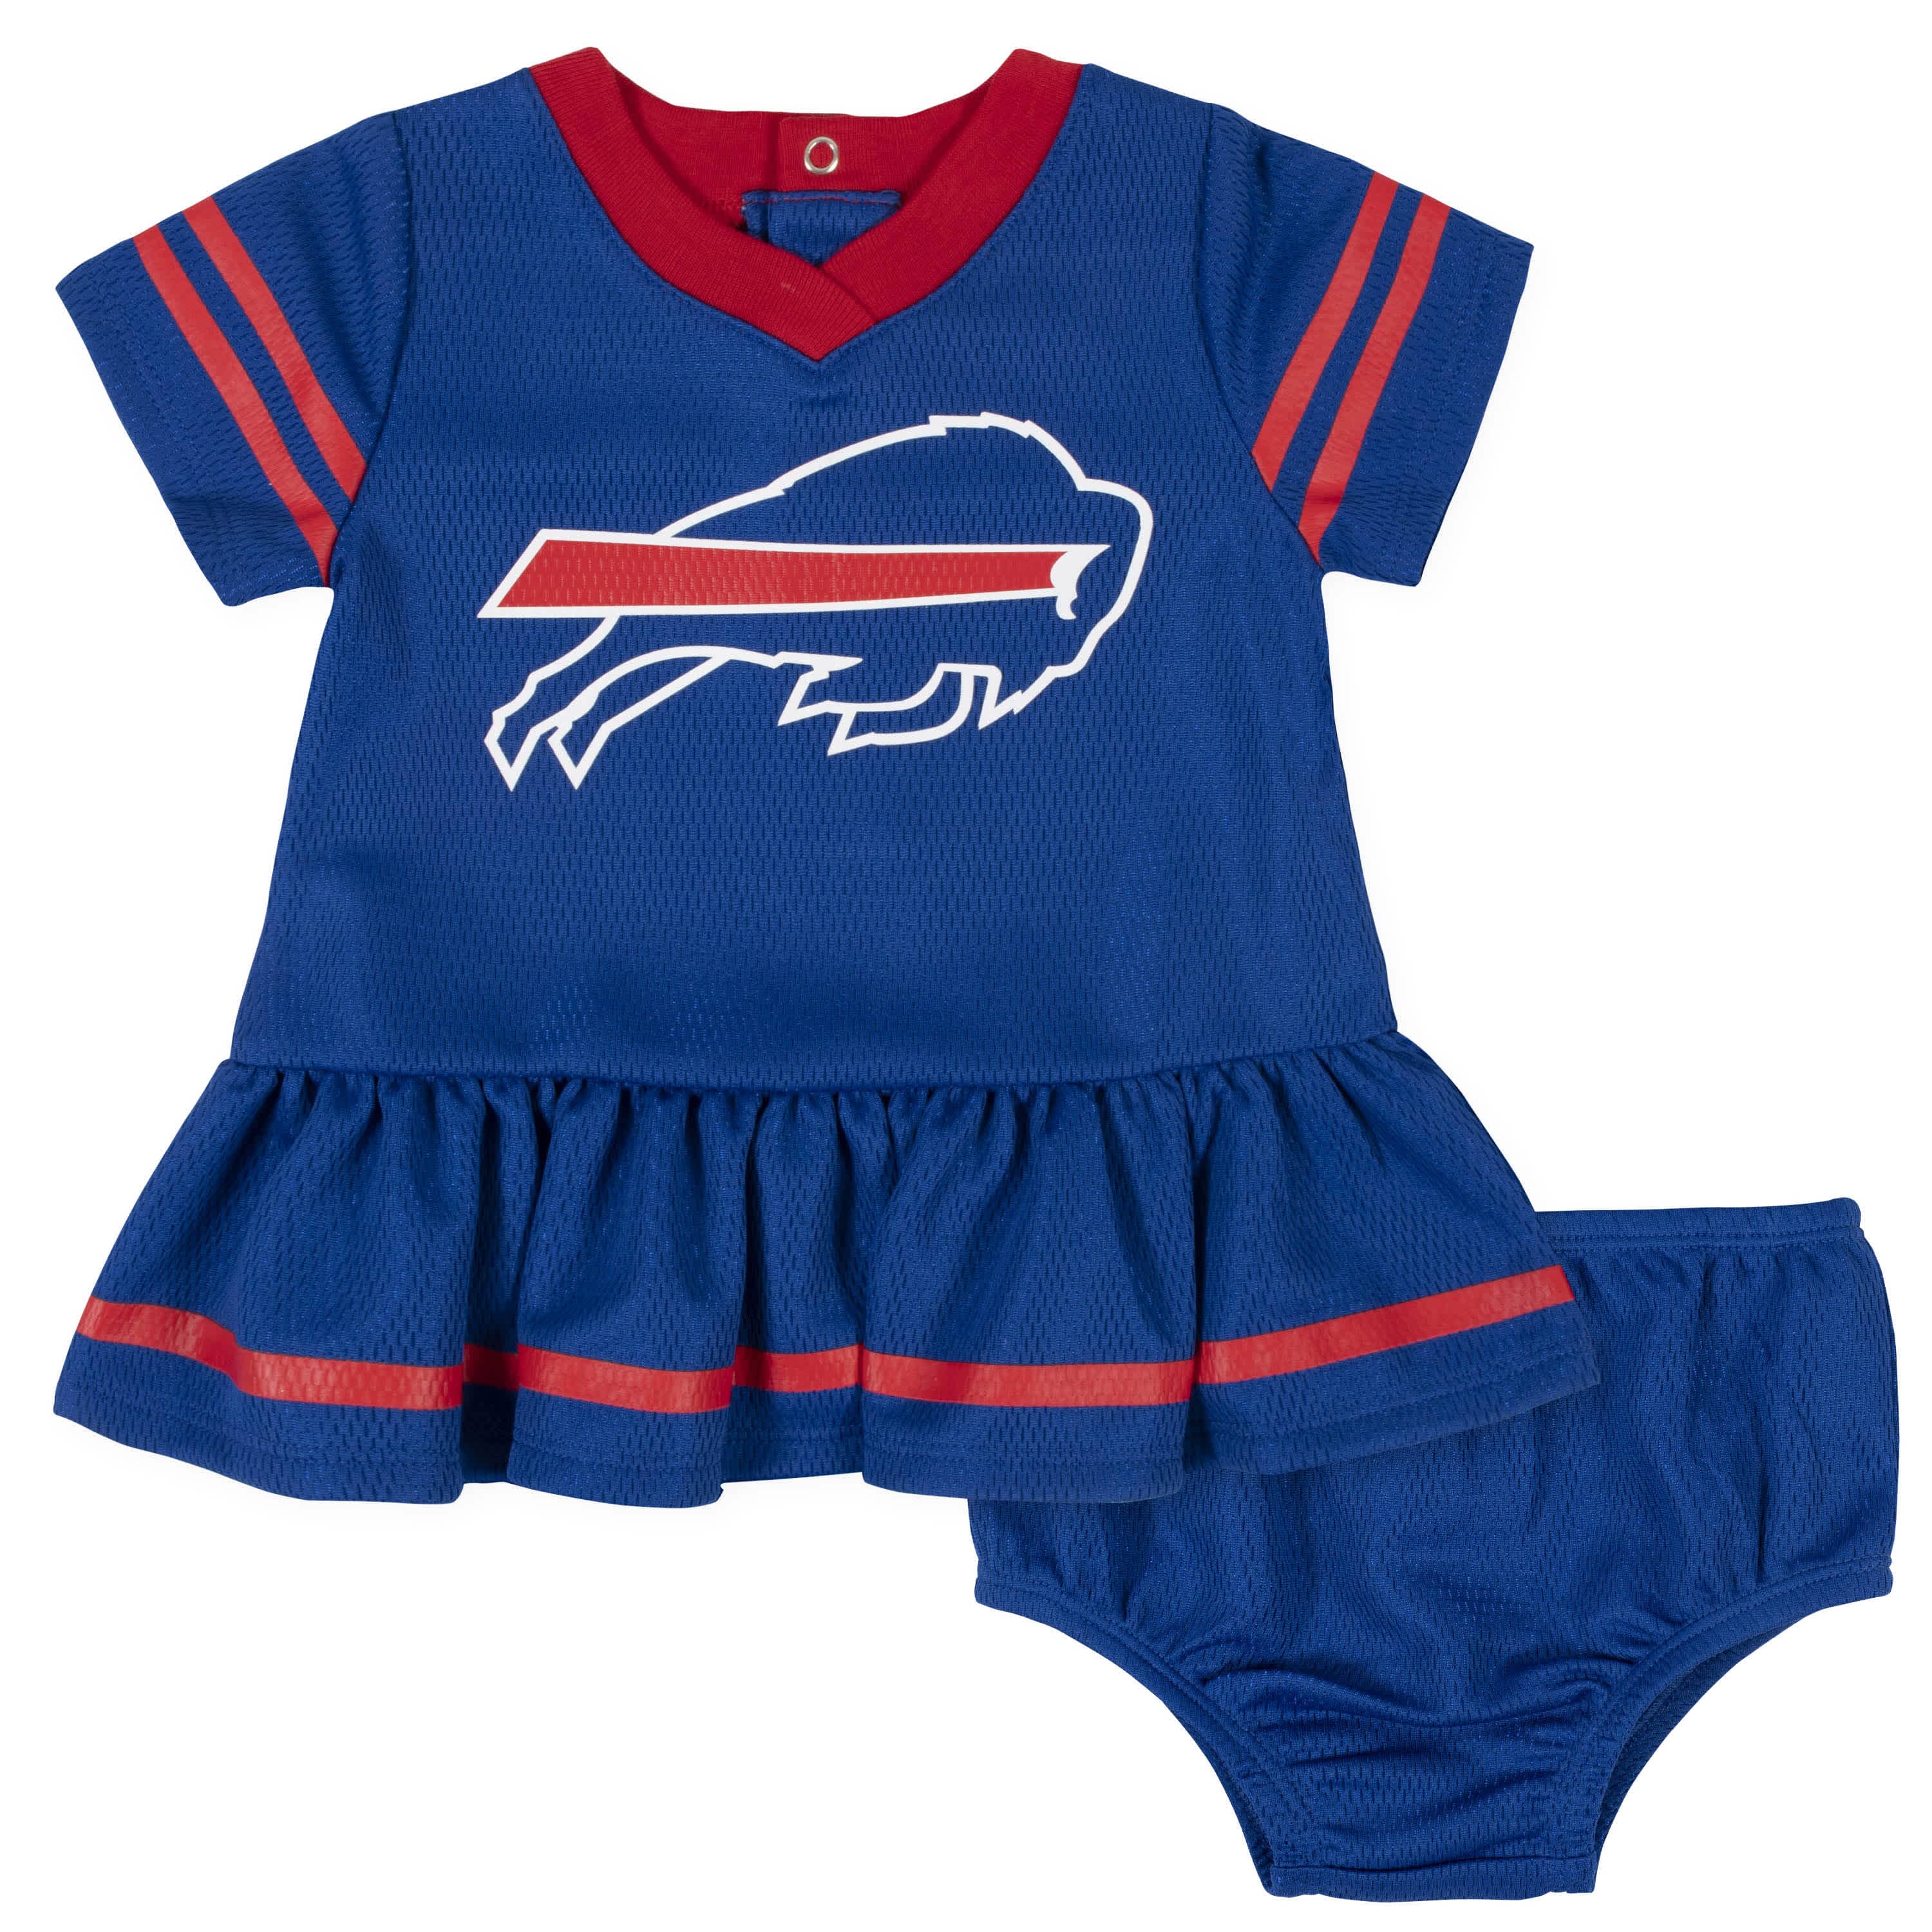 buffalo bills infant clothing